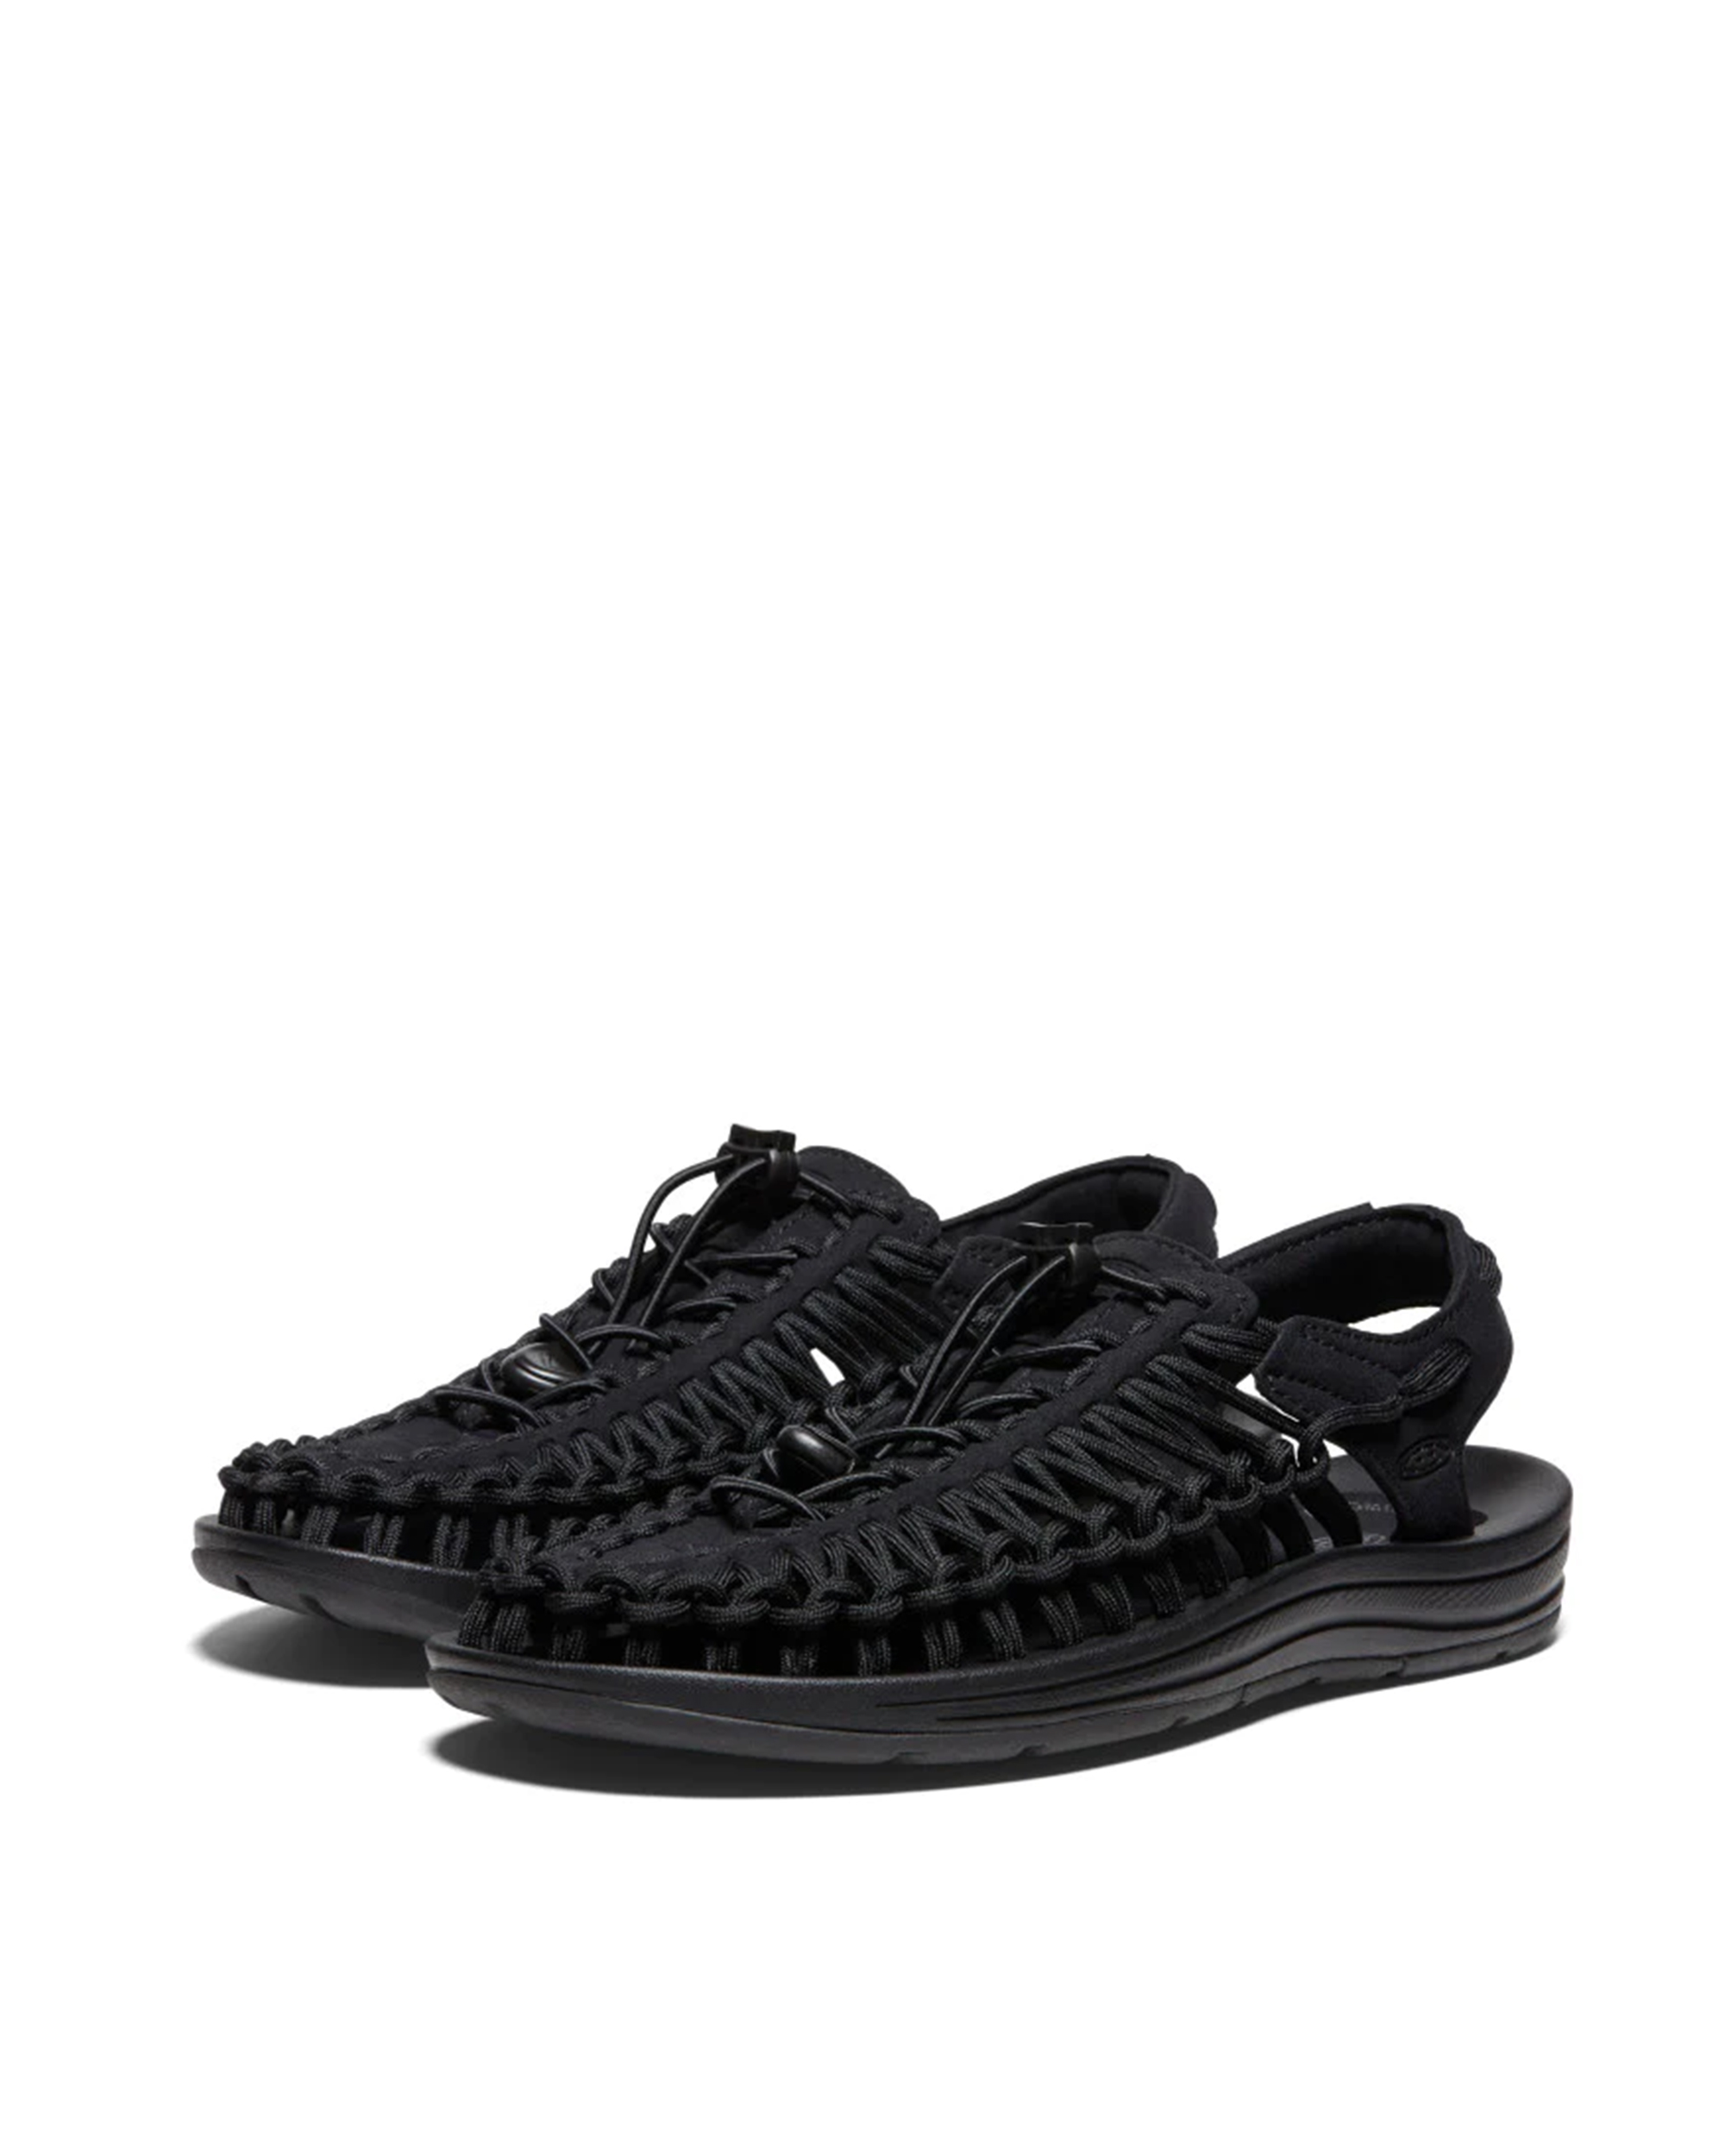 Shop Keen Black Uneek Sandal